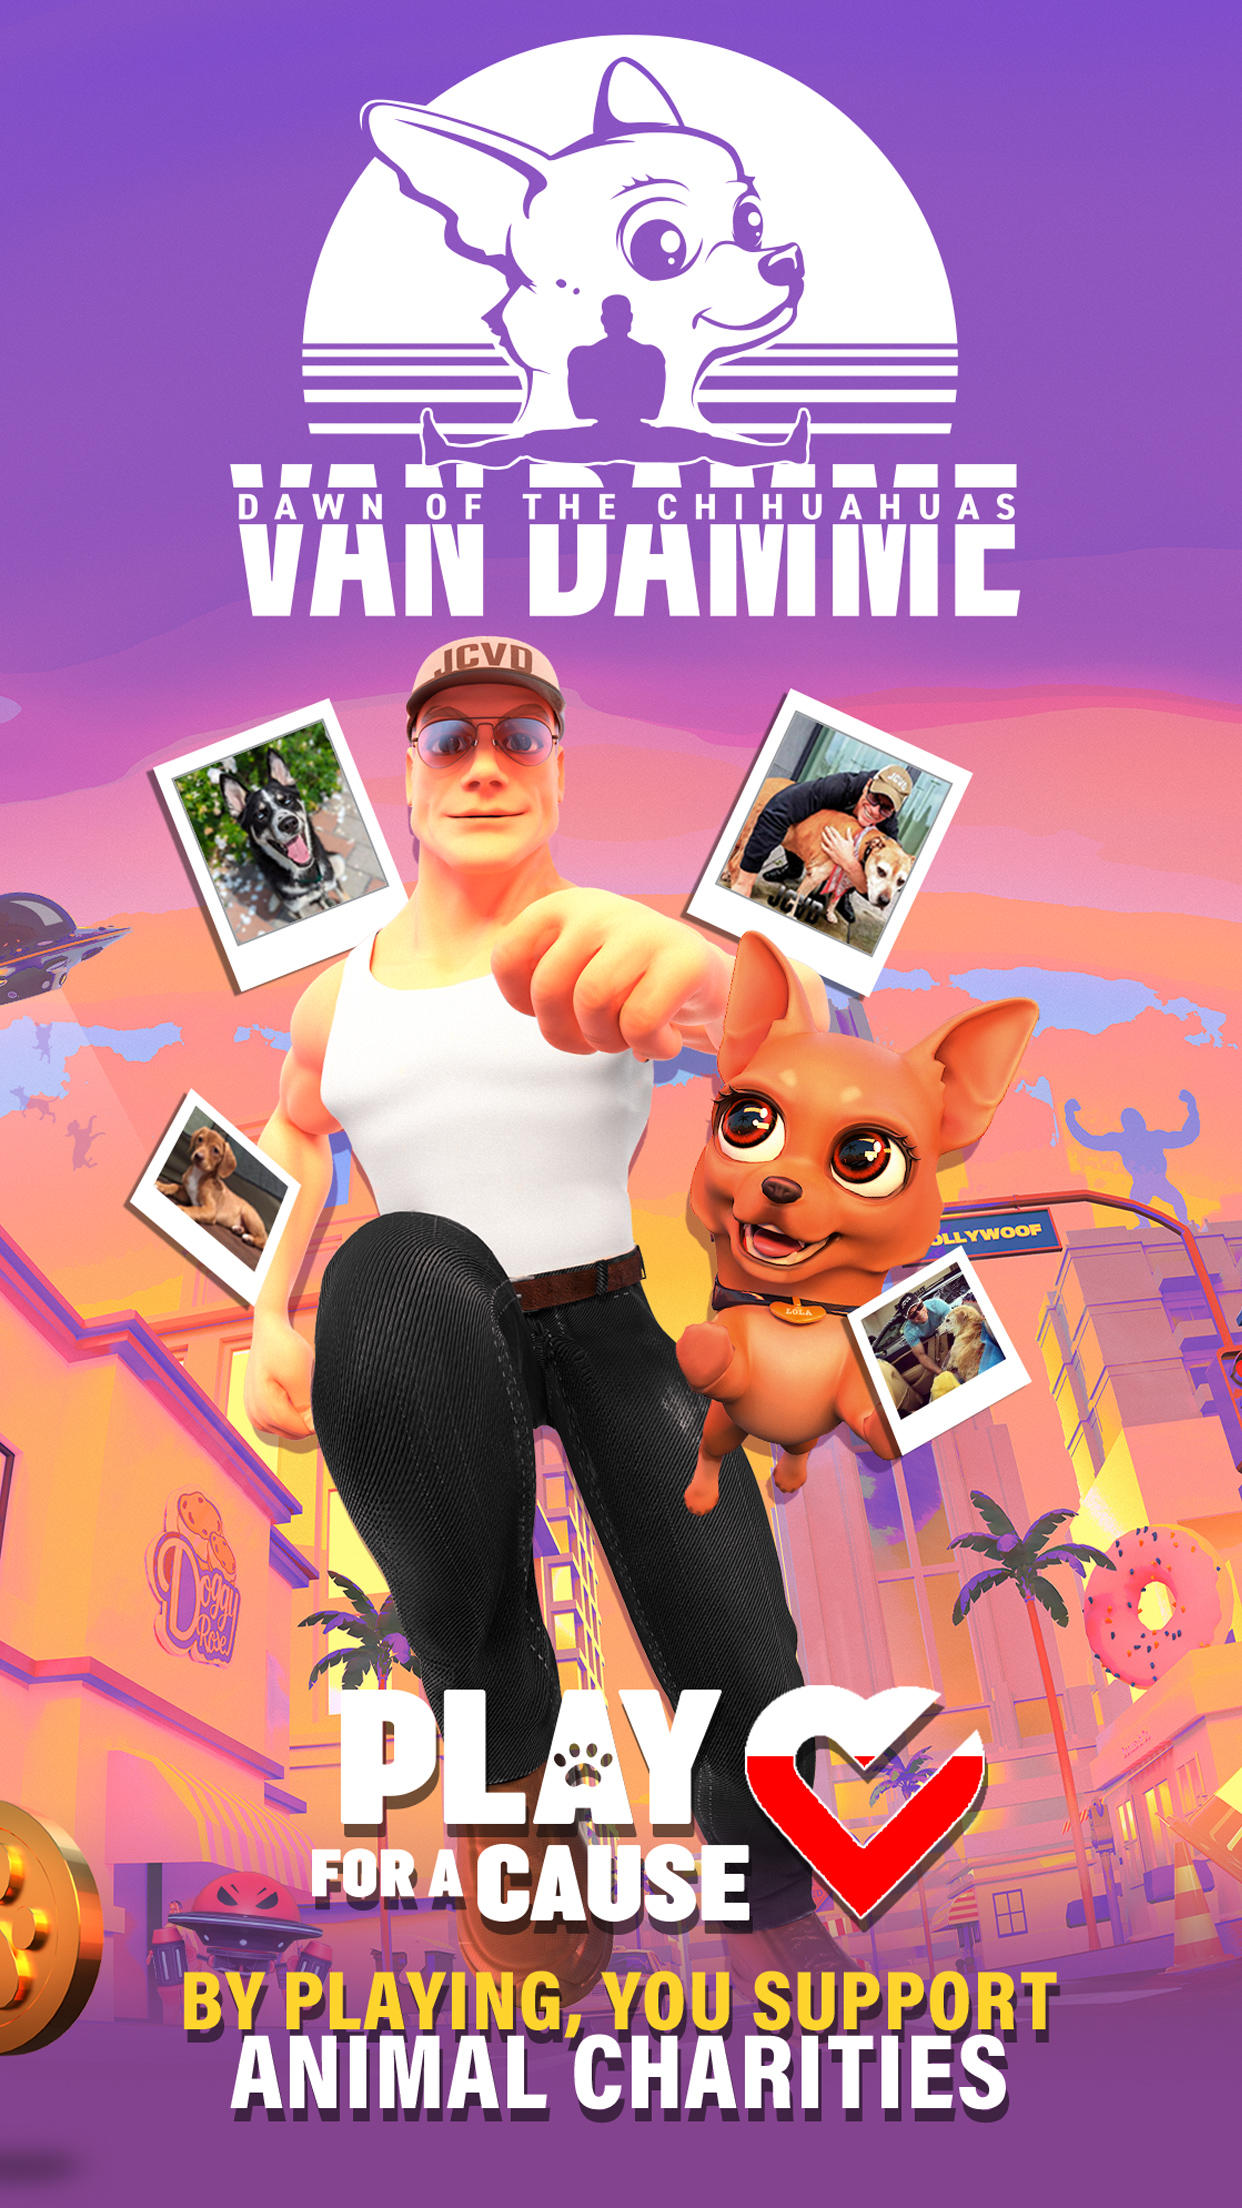 Screenshot of VAN DAMME : Dawn of Chihuahuas